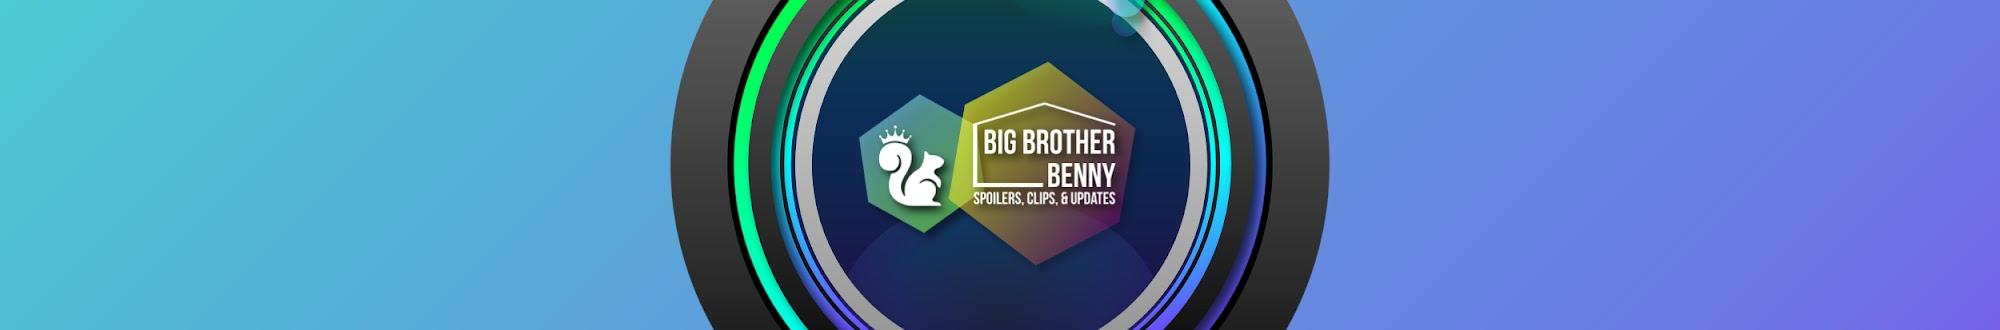 Big Brother Benny